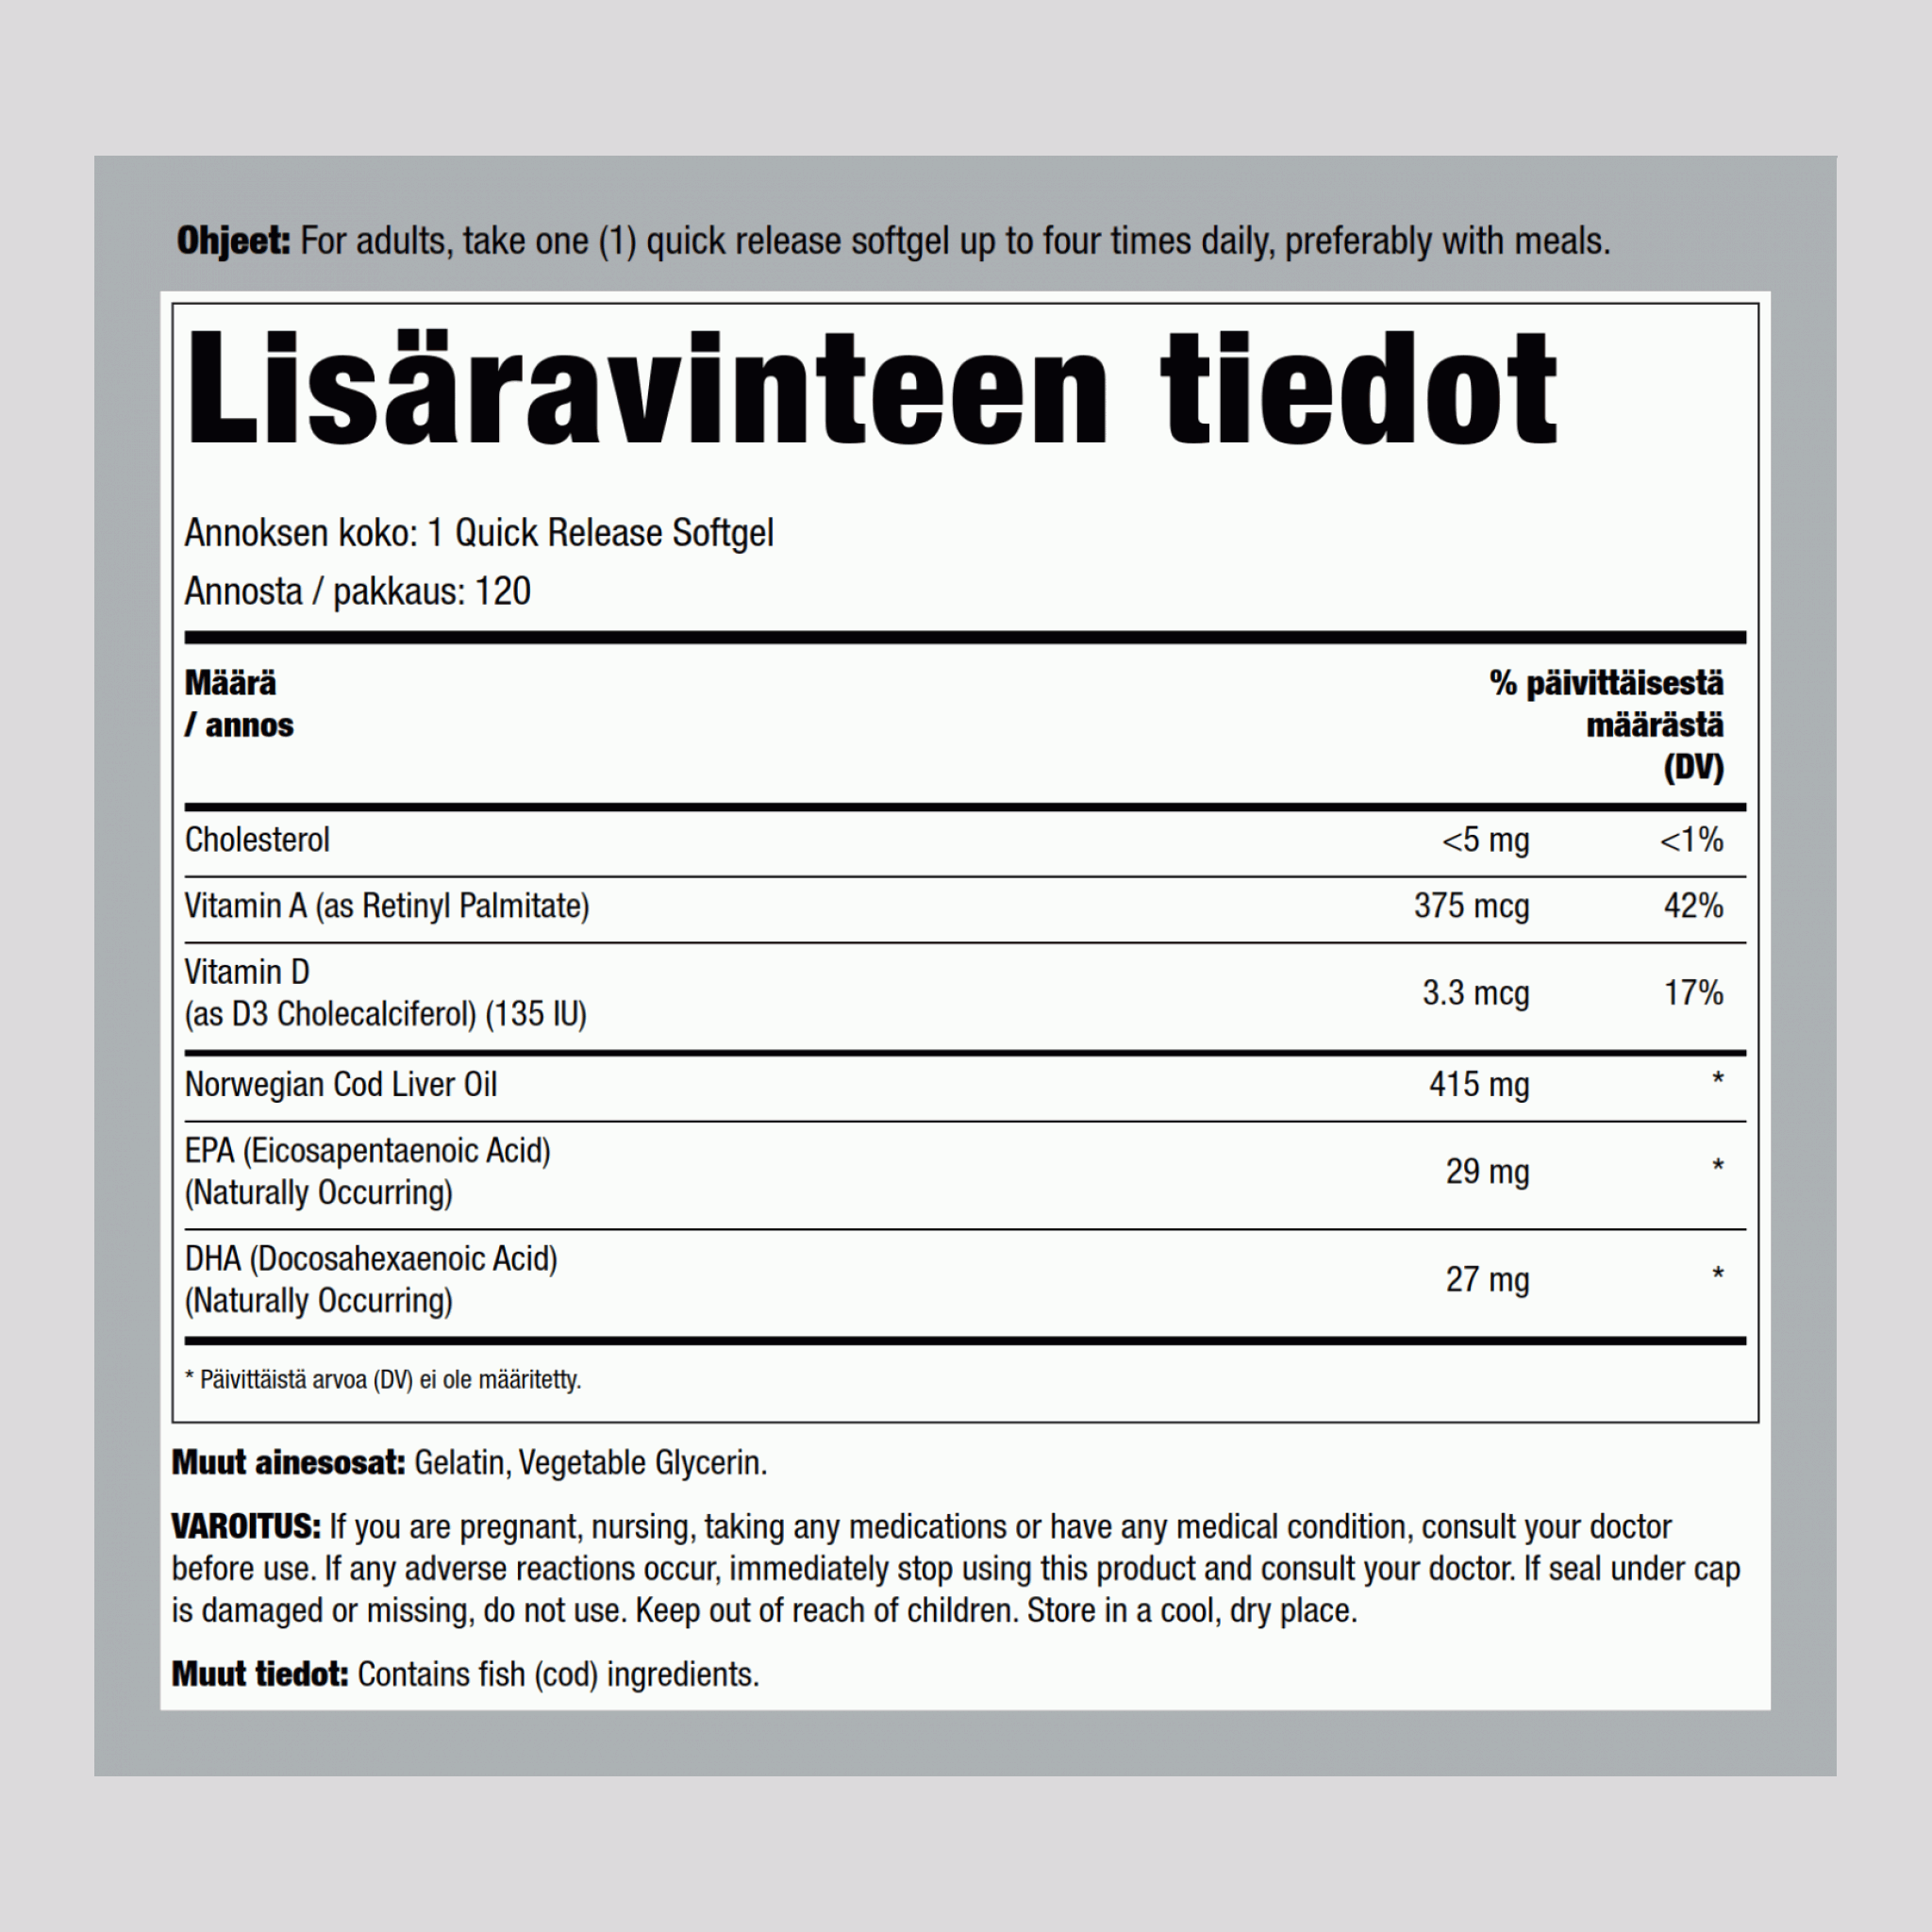 Kalanmaksaöljy  (Norwegian) 415 mg 120 Pikaliukenevat geelit     